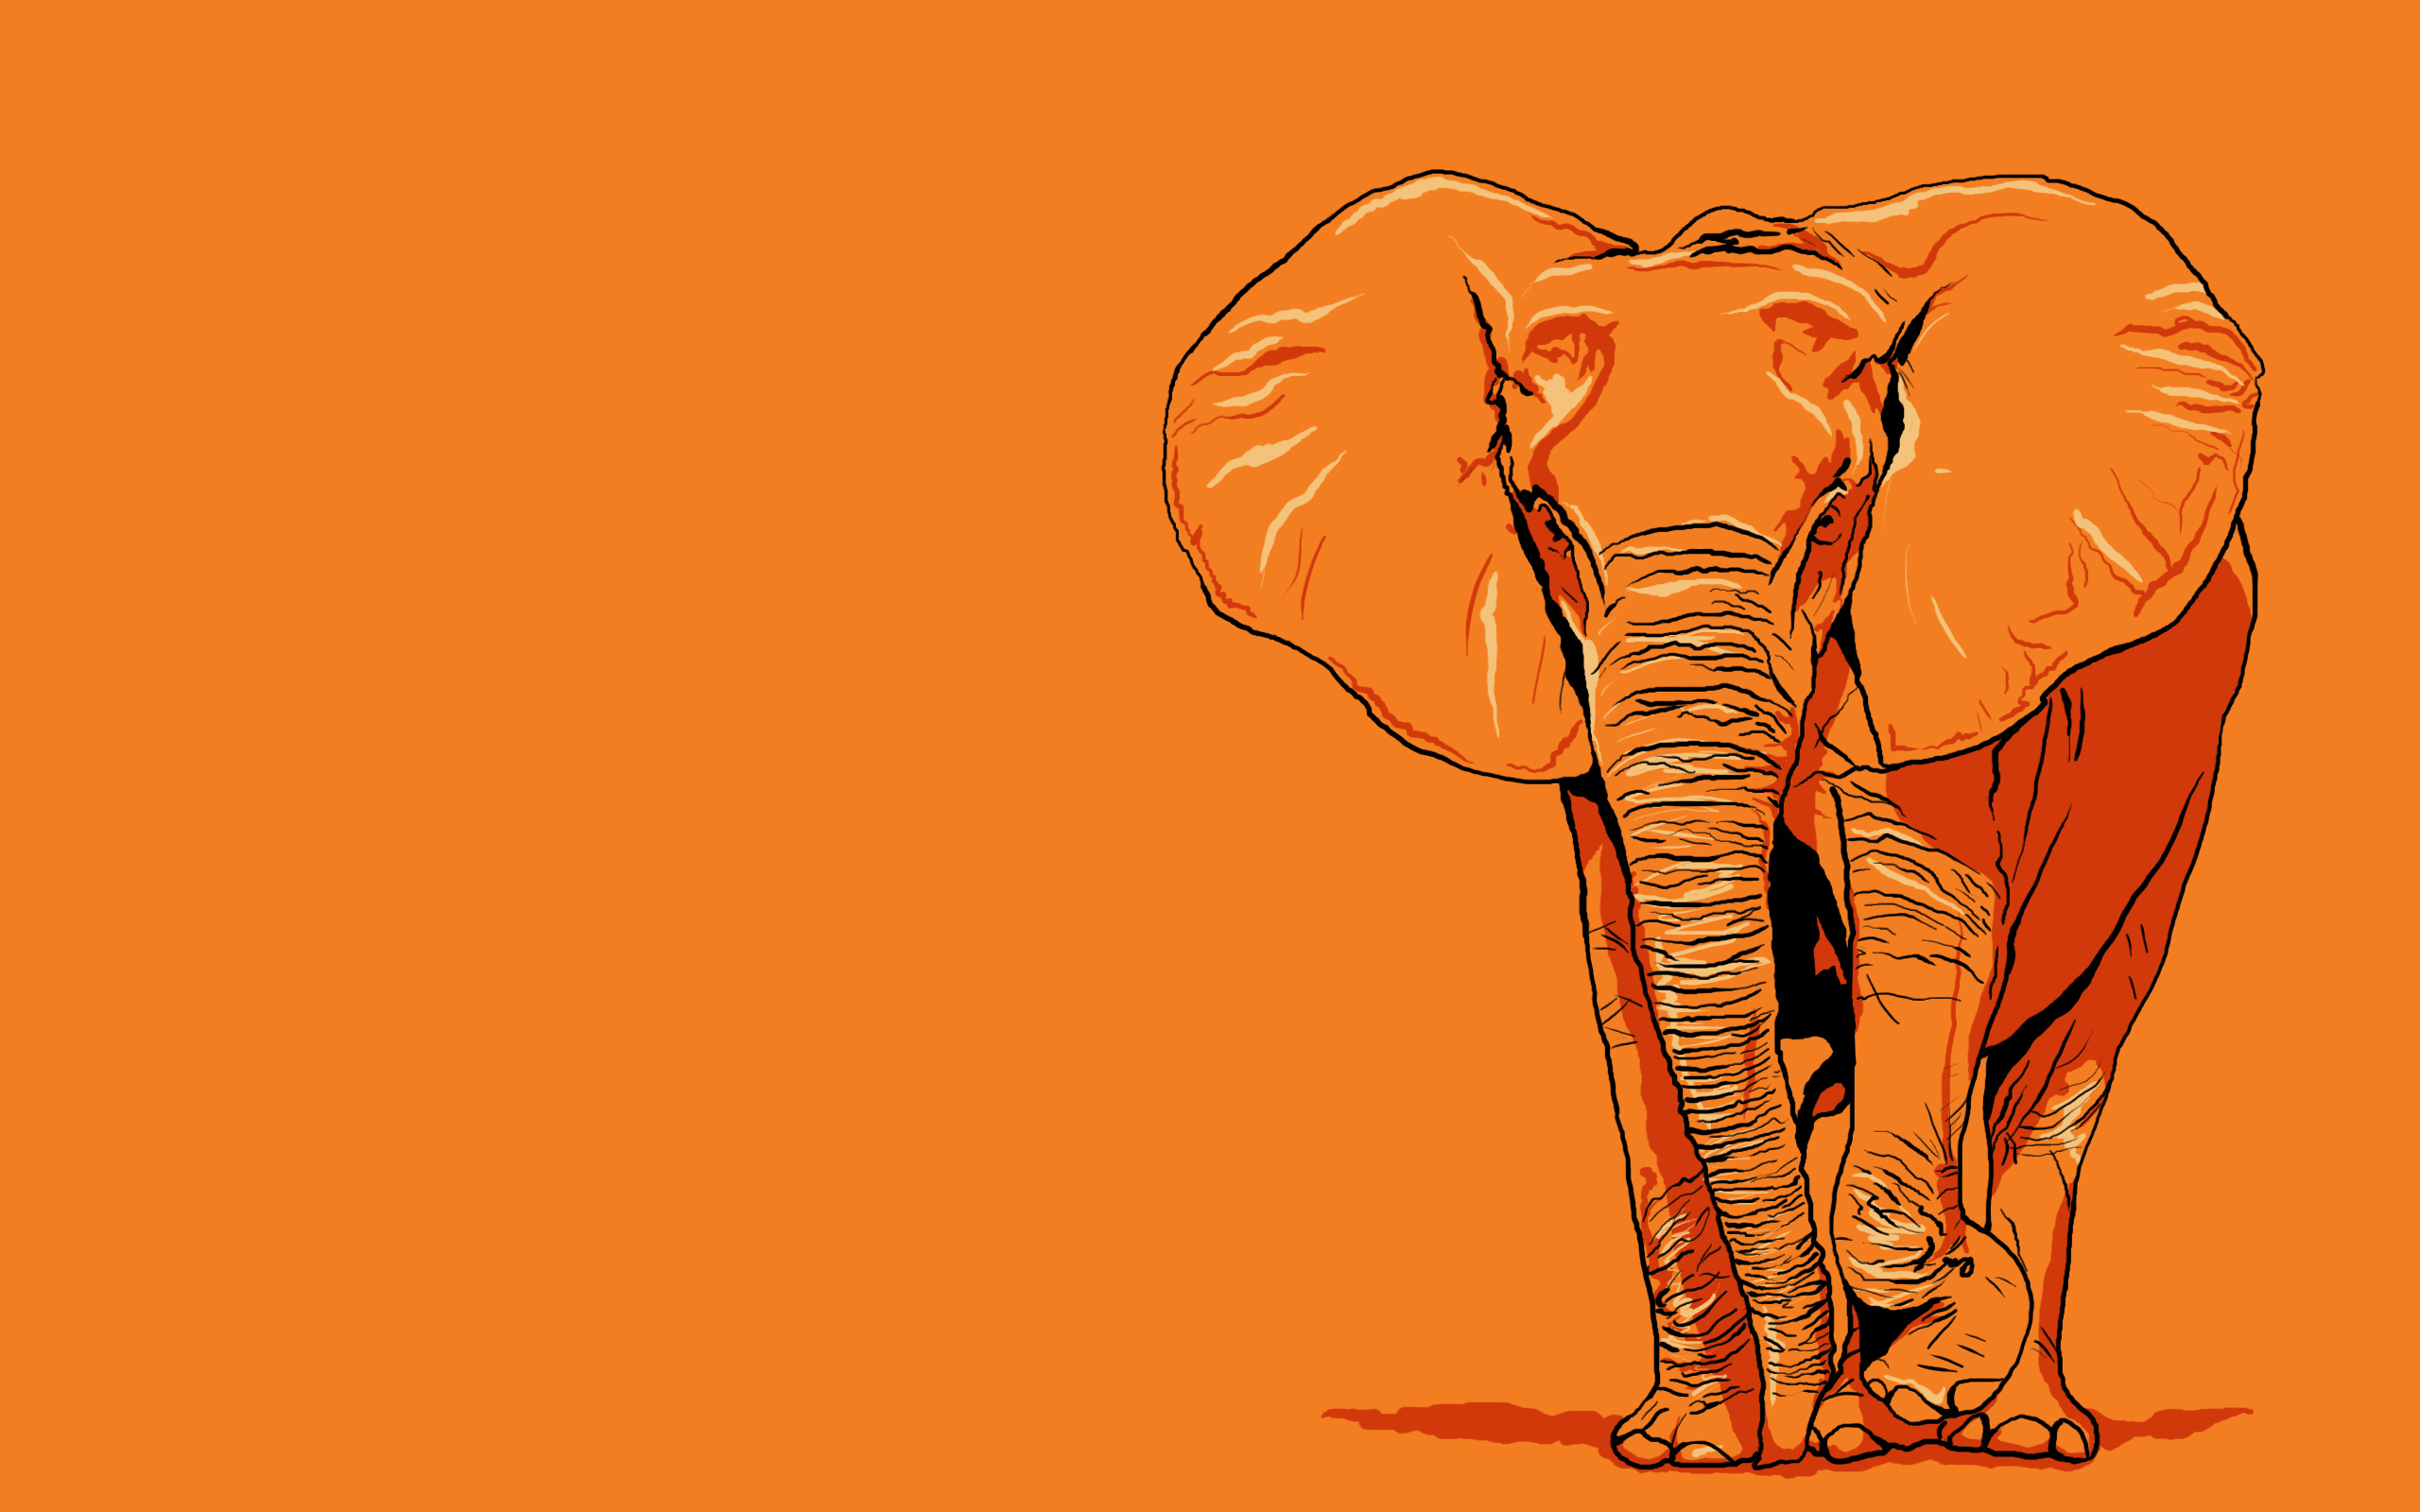 Elephant Images Free Download | PixelsTalk.Net